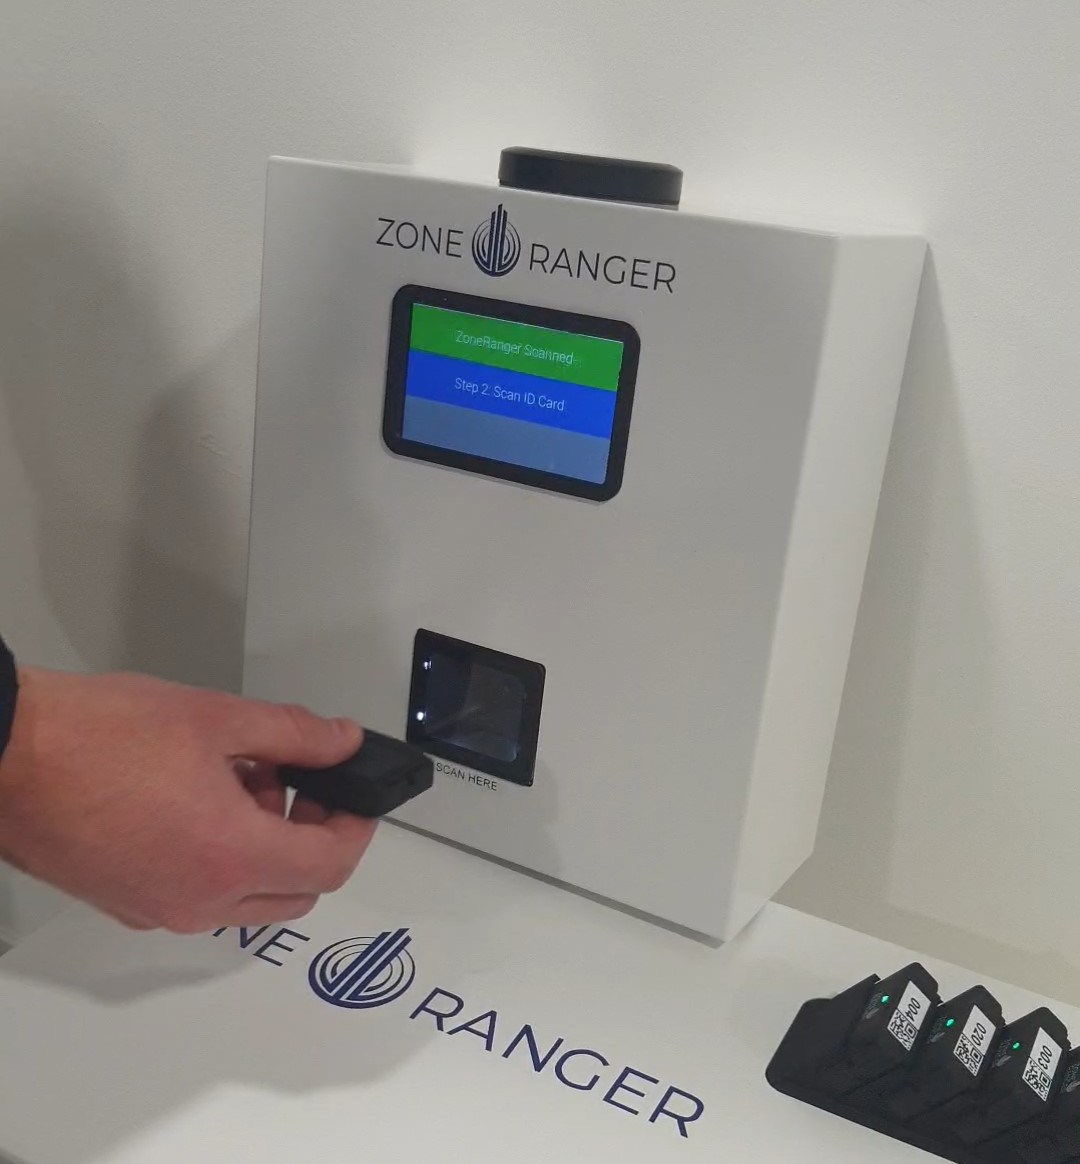 Scanning ZoneRanger device 